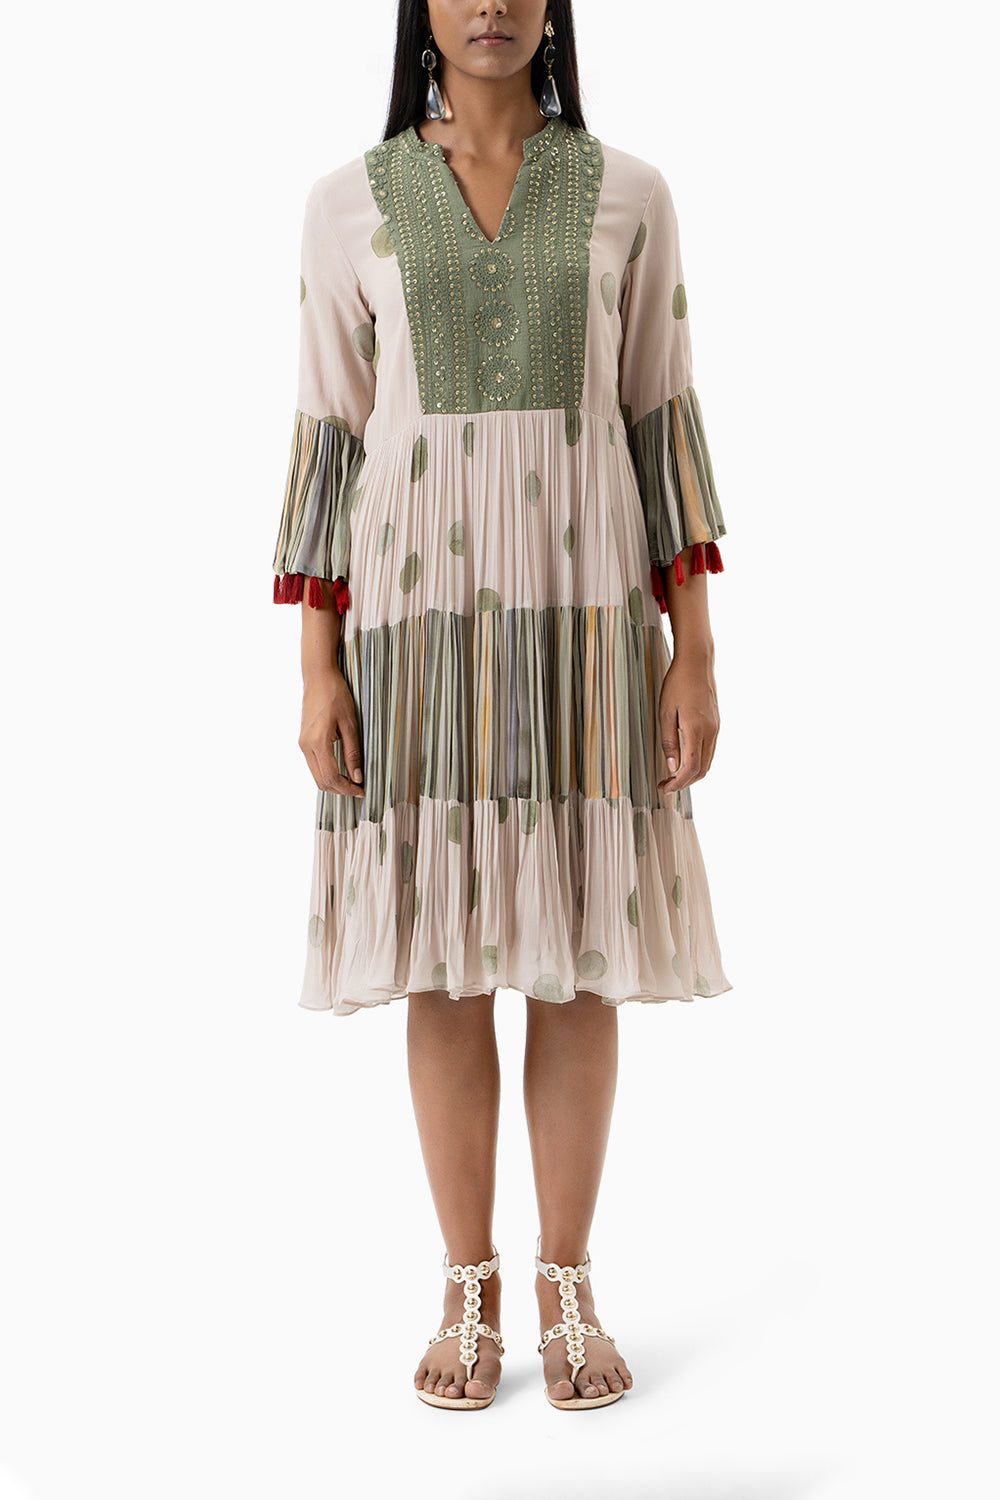 Olive Polka Dot and Striped Printed Dress